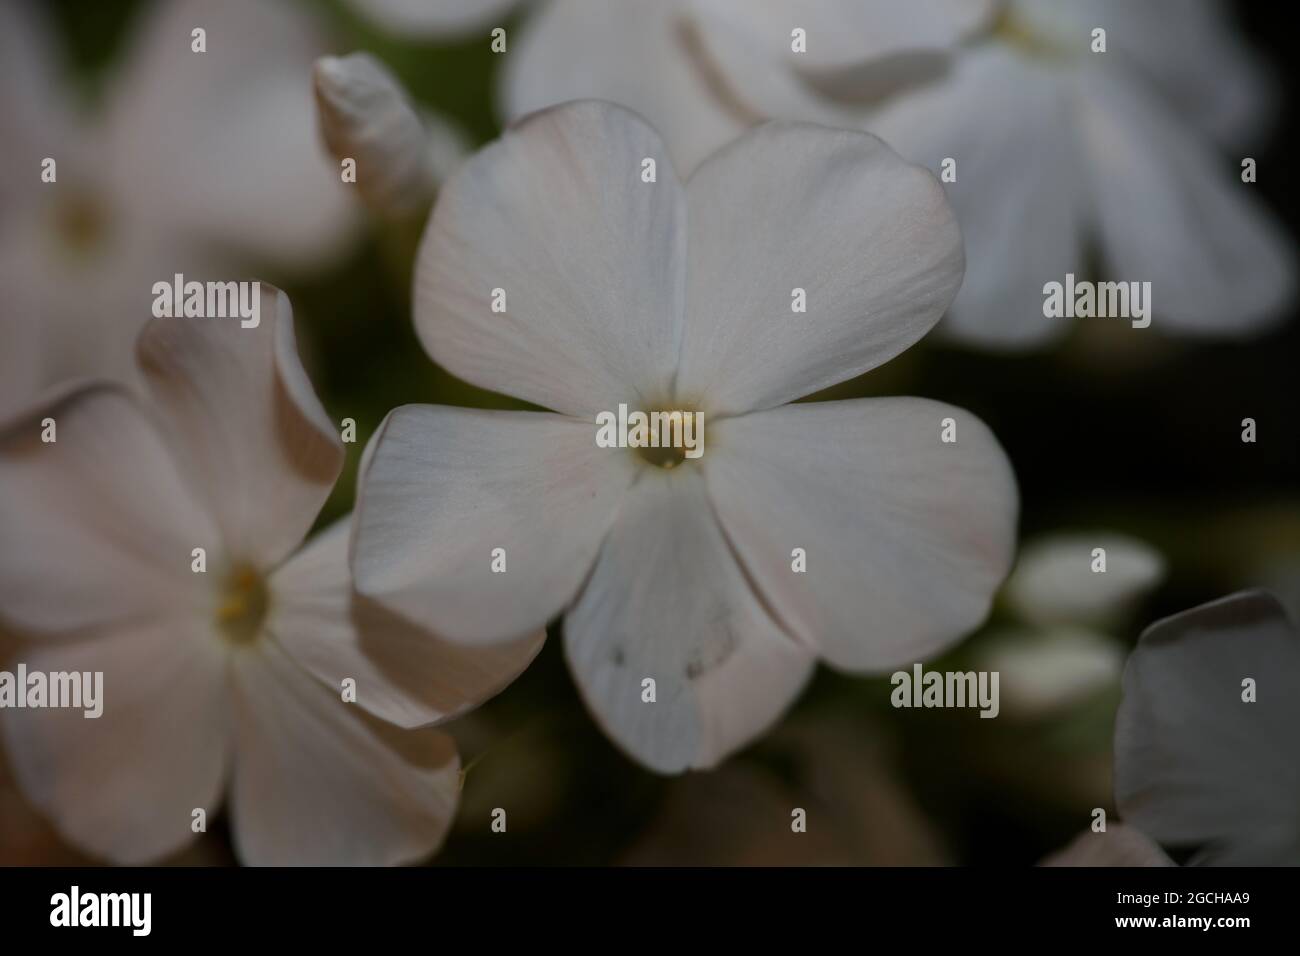 White flower blossom macro background phlox paniculata family polemoniaceae high quality big size prints Stock Photo